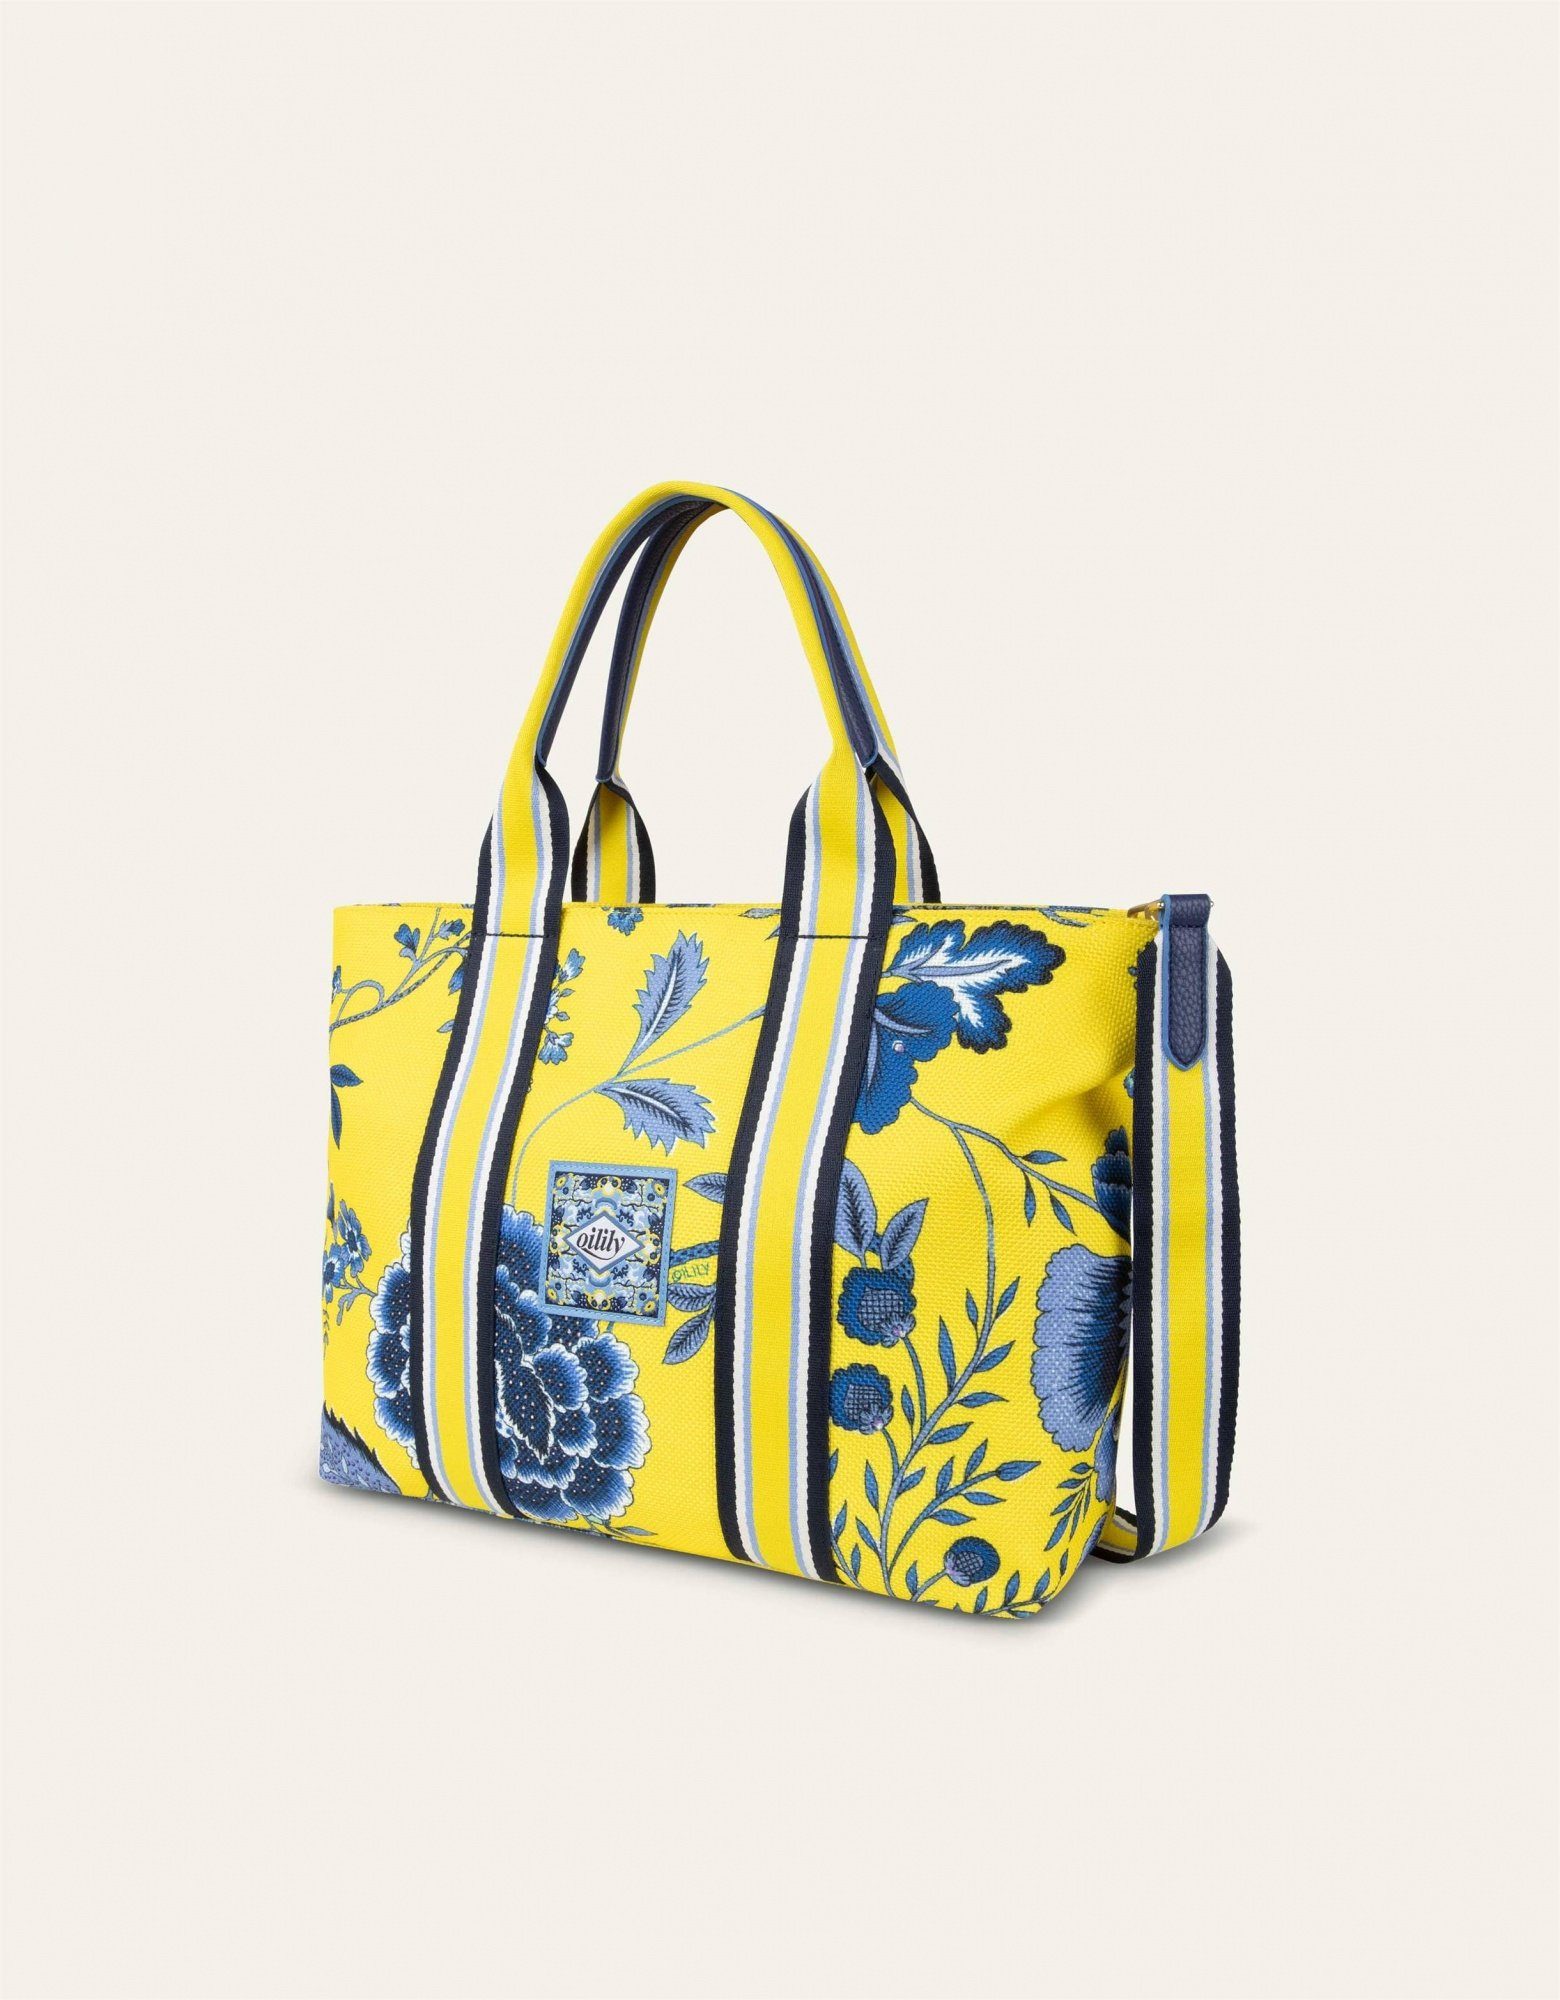 Tara Yellow Bag Empire Tote Icon World Oilily Sits Handtasche